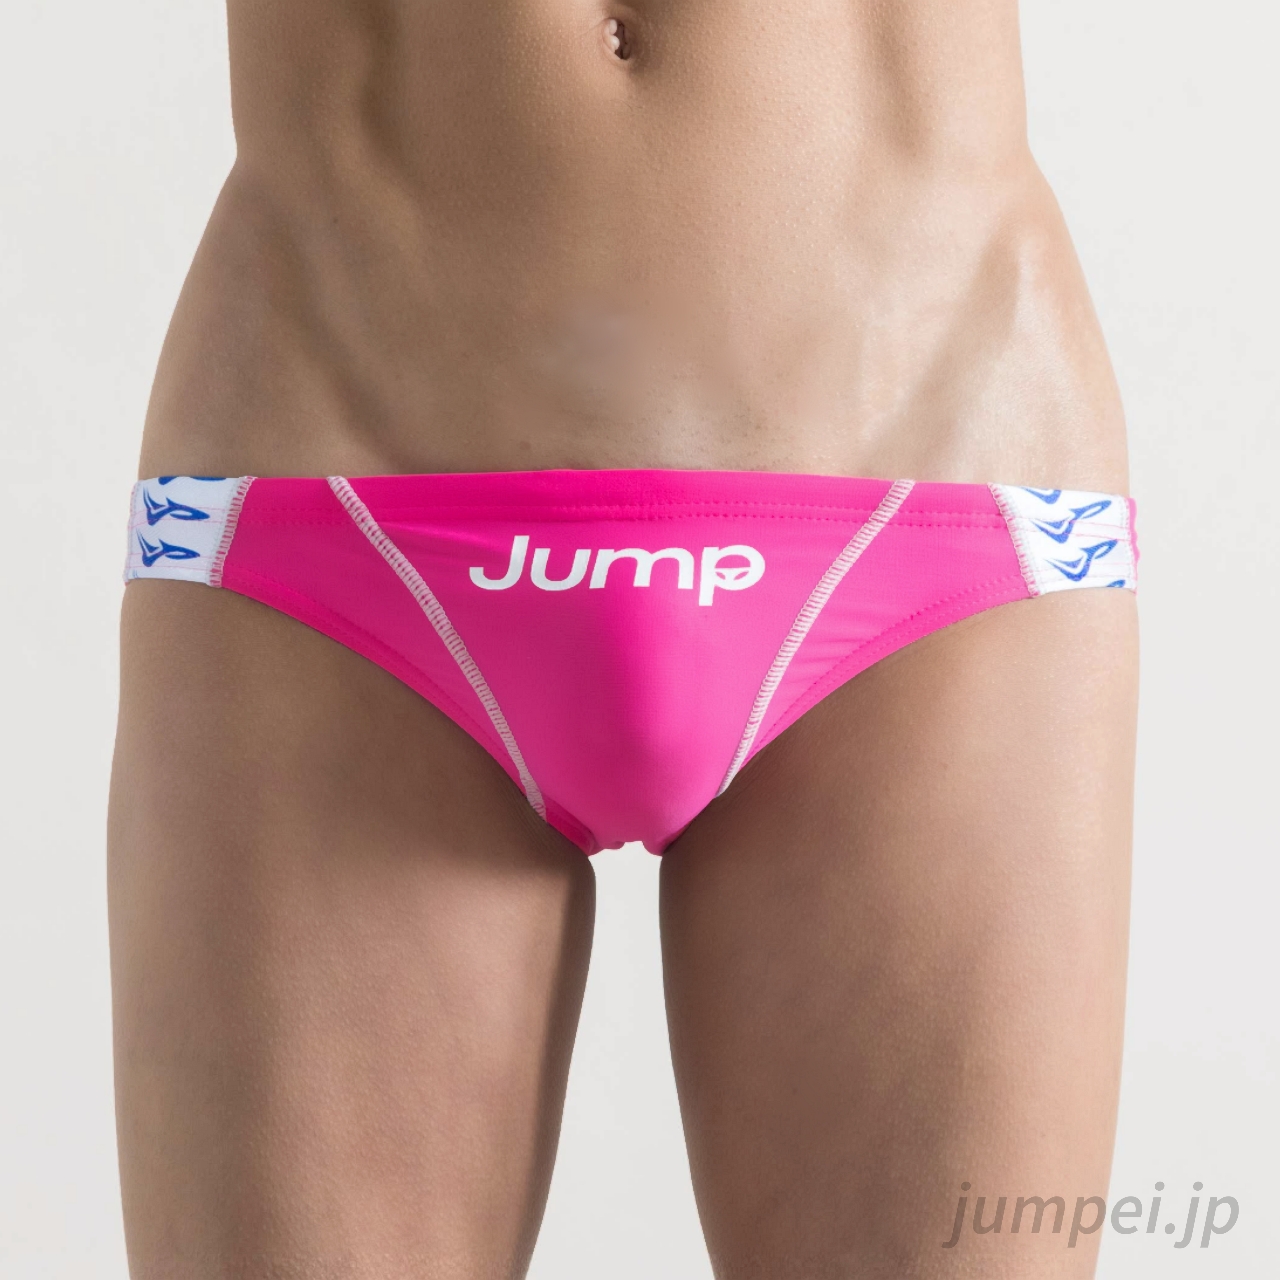 JUMP ONLINE STORE / JUMP メンズ競泳水着 SIDE-LOGO ピンク ビキニ